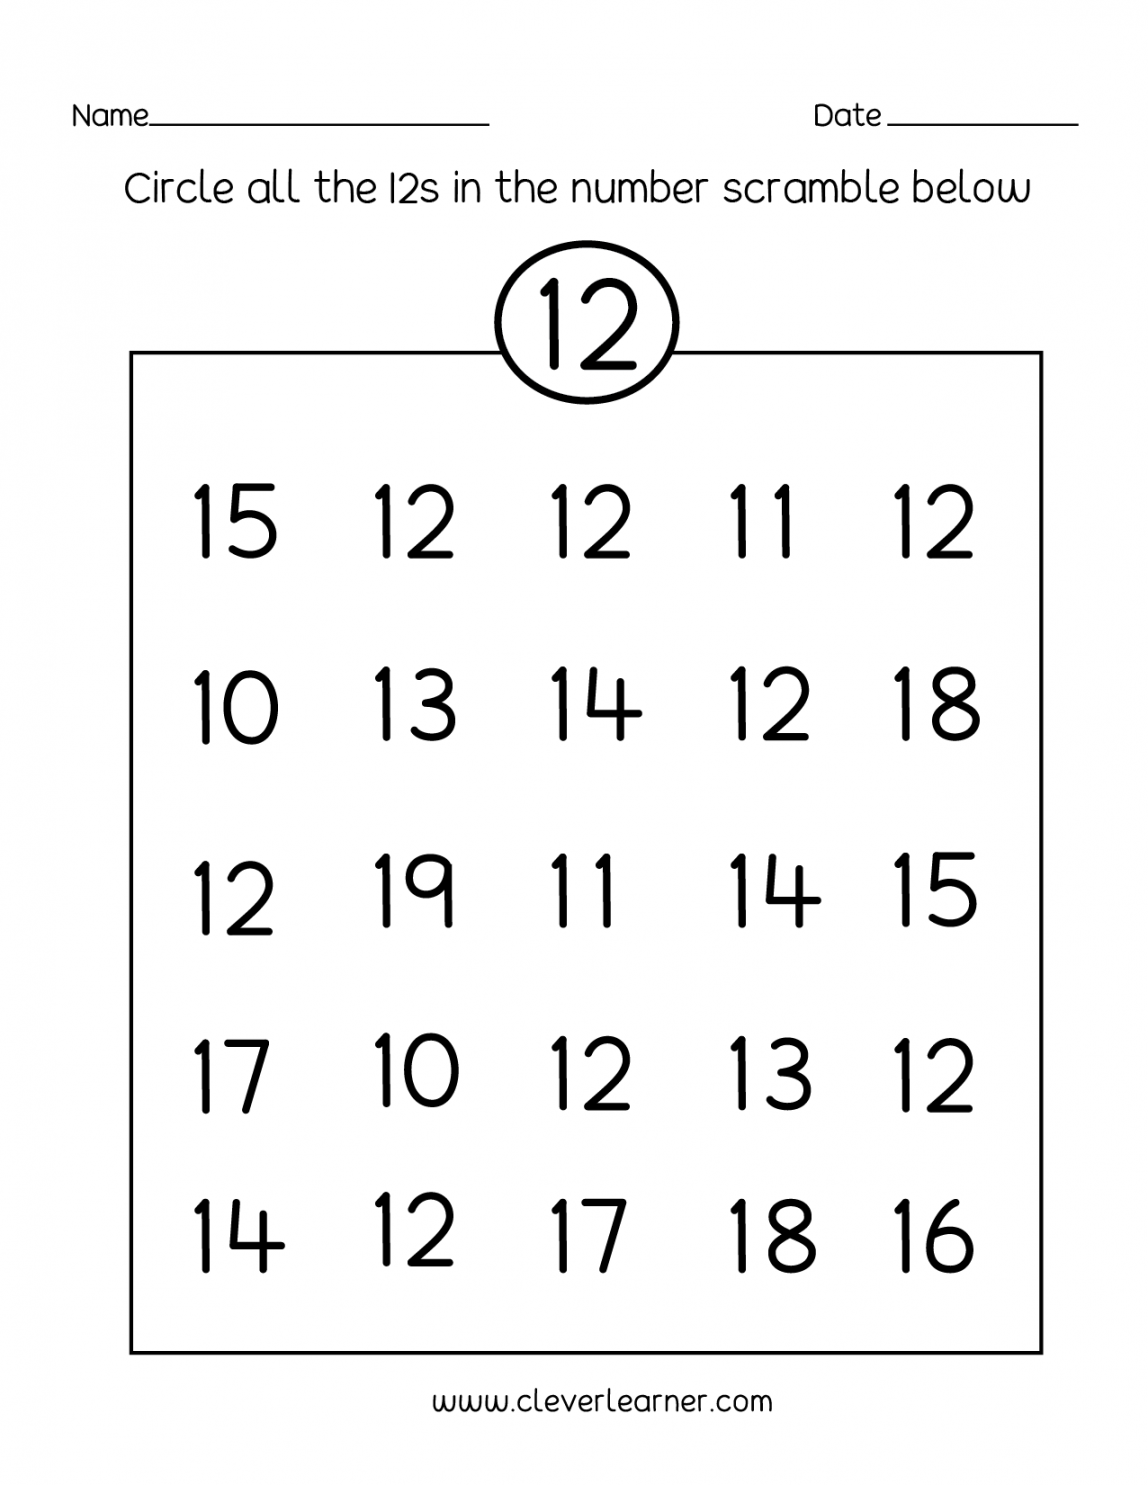 K-12 Free Printable Worksheets - Printable - Number twelve writing, counting and identification printable